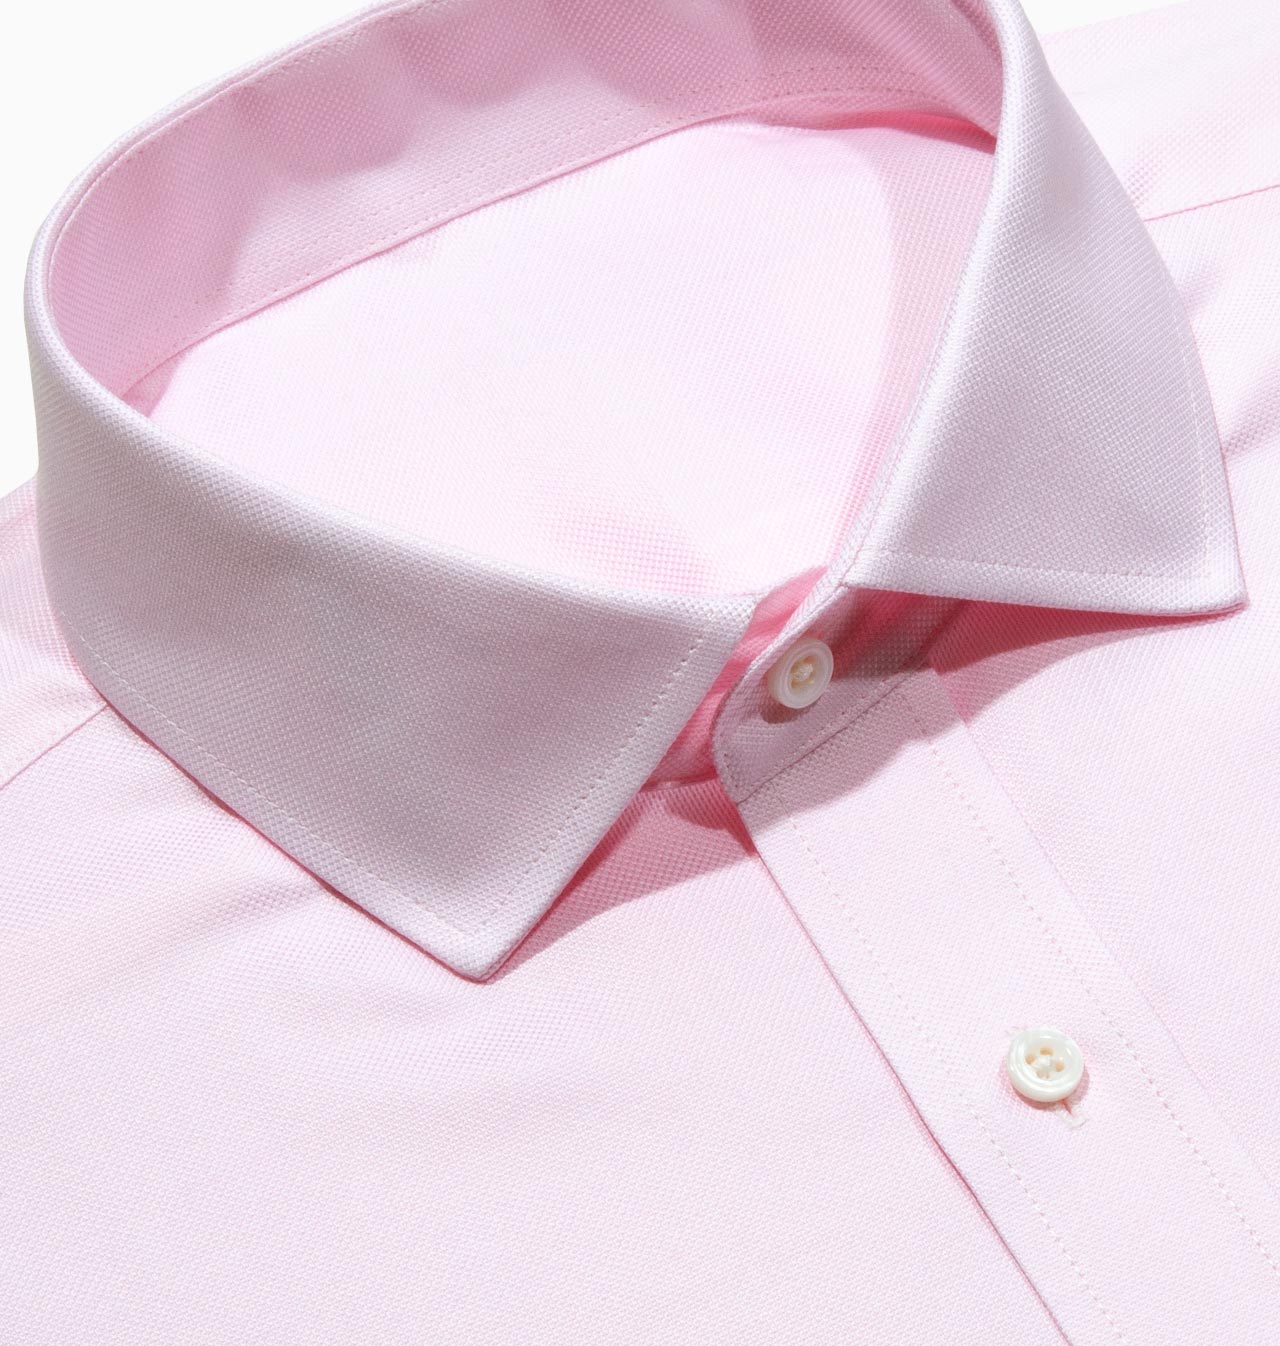 Men’s Tailored Light Pink Royal Oxford Dress Shirt